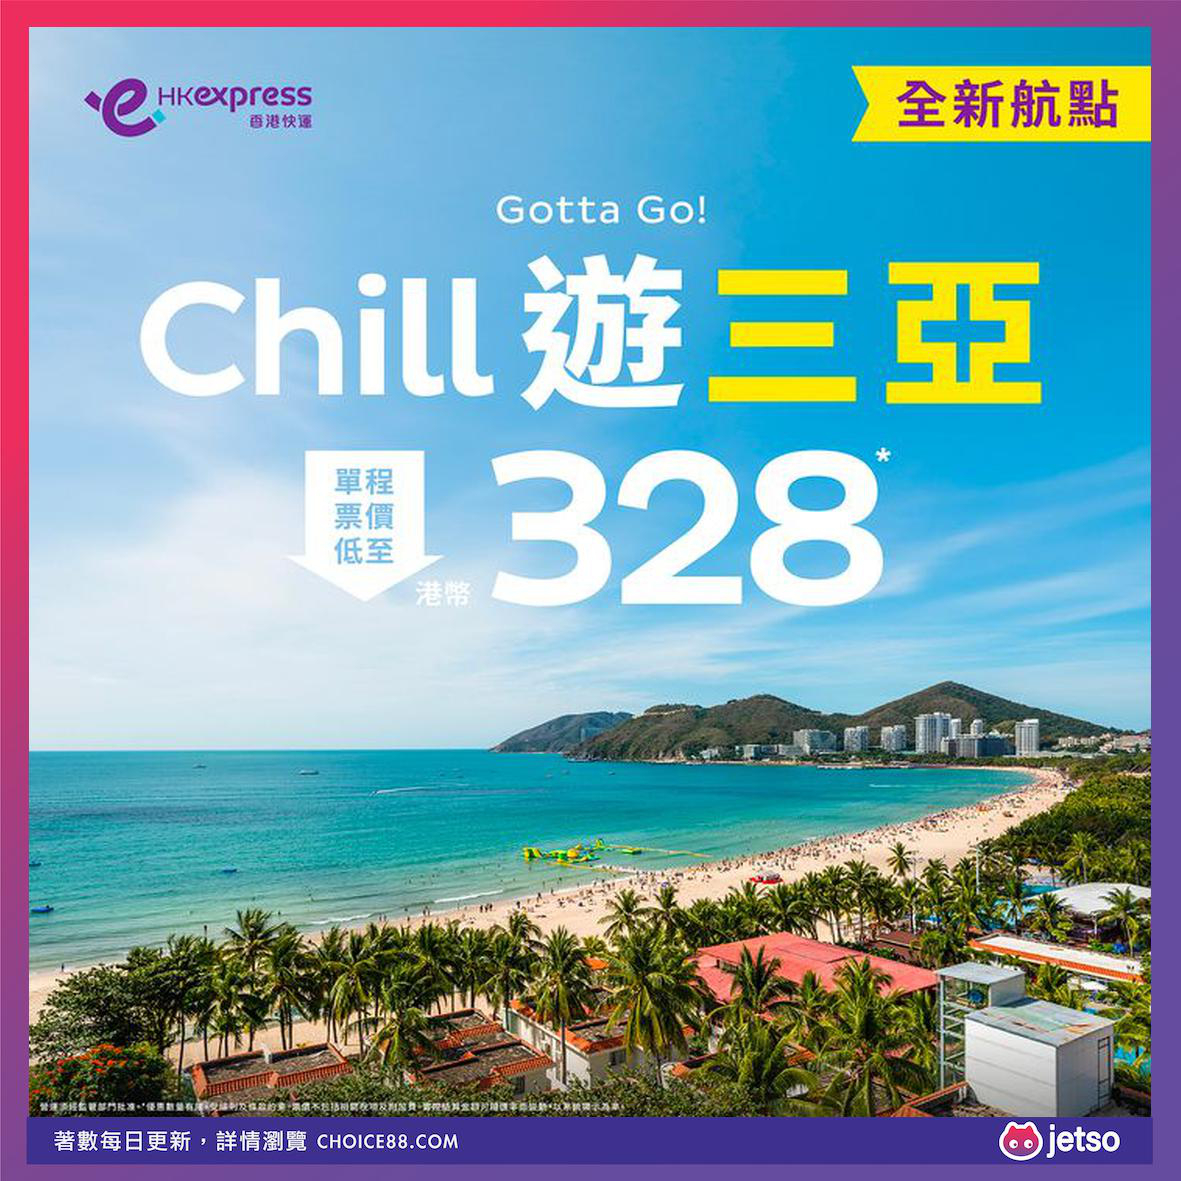 HK Express : [机票优惠]三亚特惠旅游套票